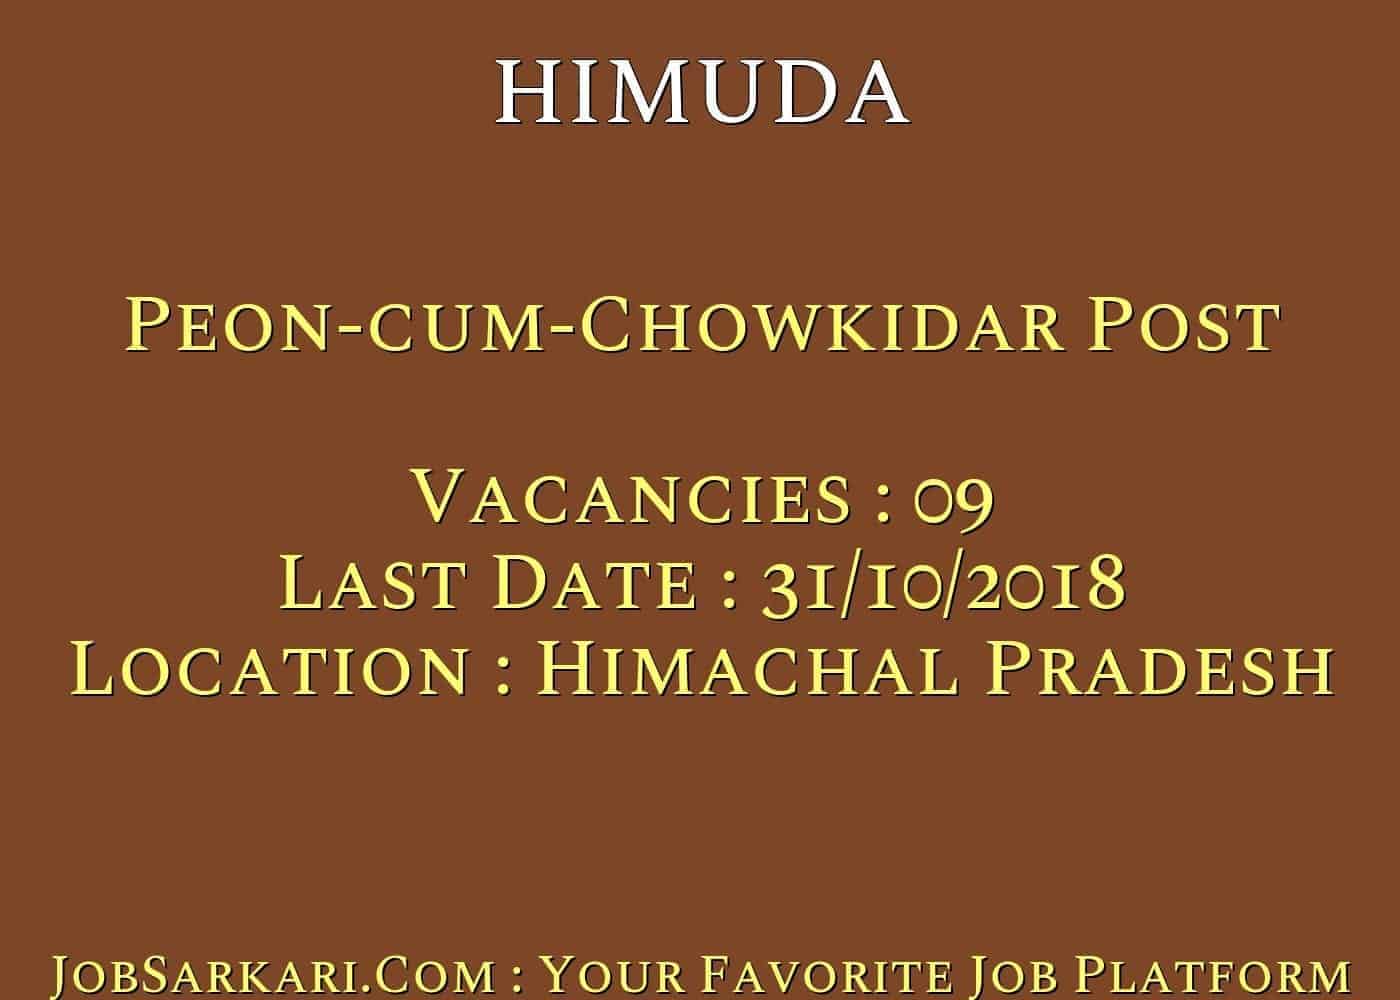 HIMUDA Recruitment 2018 for Peon-cum-Chowkidar Post